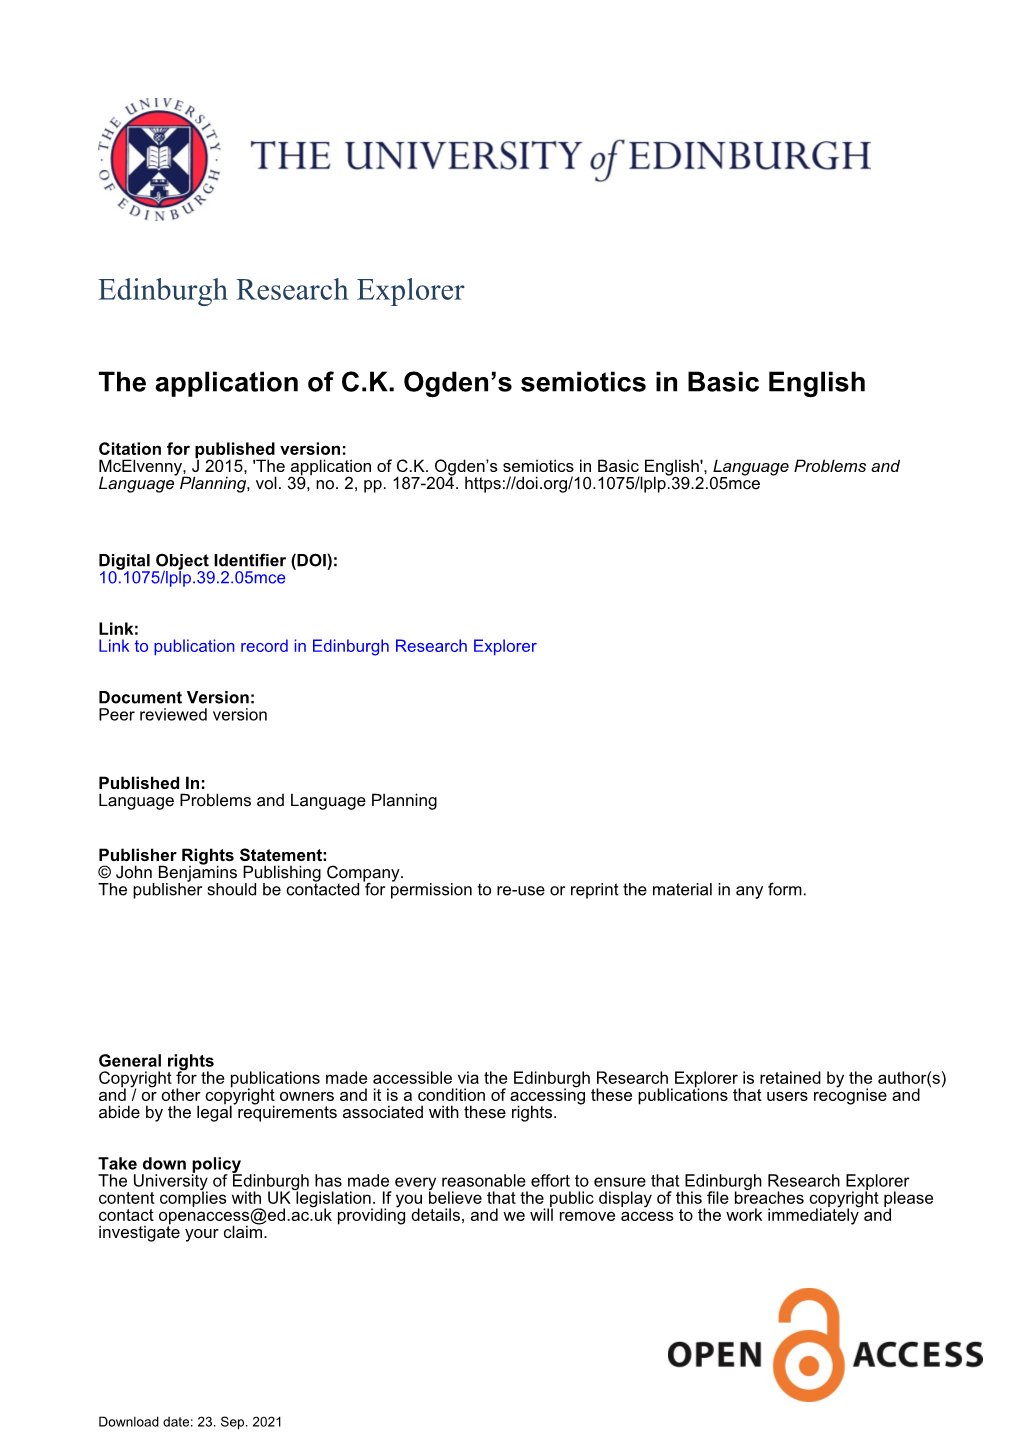 The Application of CK Ogden's Semiotics in Basic English